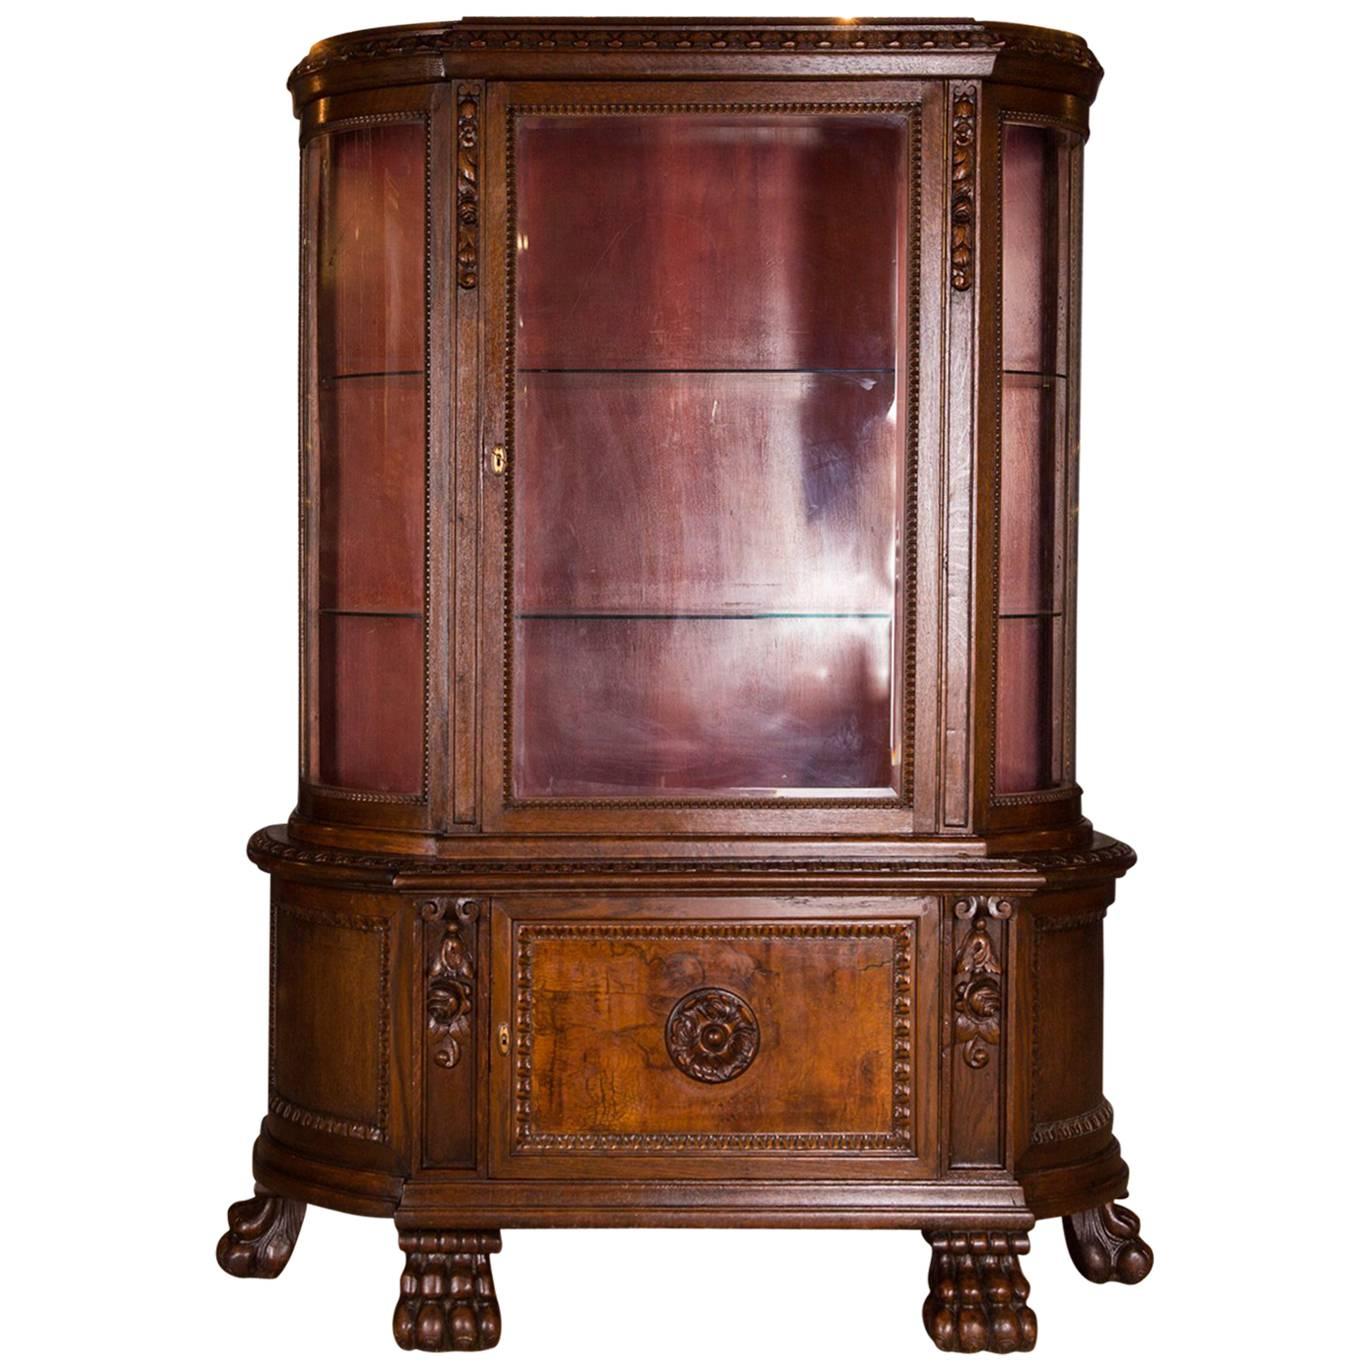 19th Century Antique Cabinet with Lions Feet Renaissance Revival